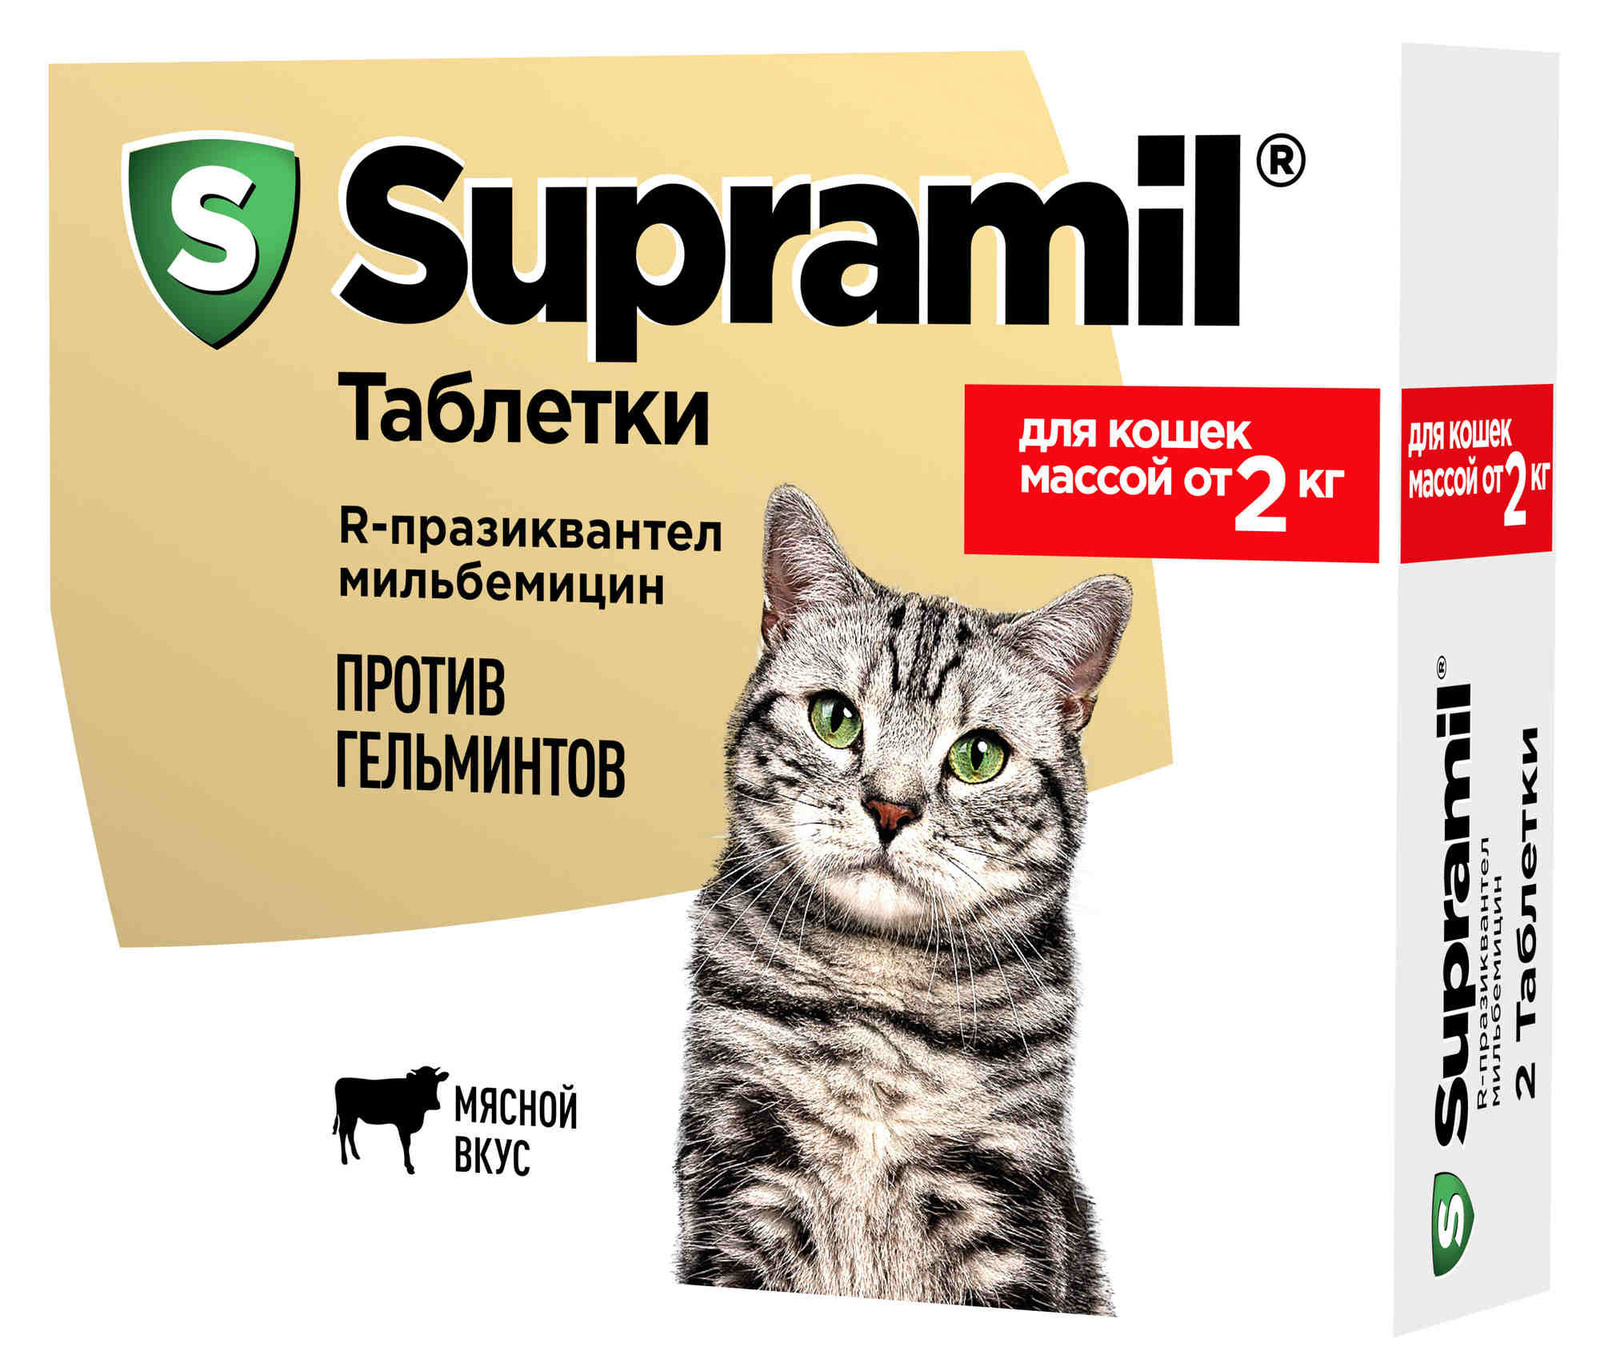 Астрафарм Астрафарм антигельминтный препарат Supramil для кошек массой от 2 кг (таблетки) (20 г) supramil таблетки для кошек массой от 2кг 2шт